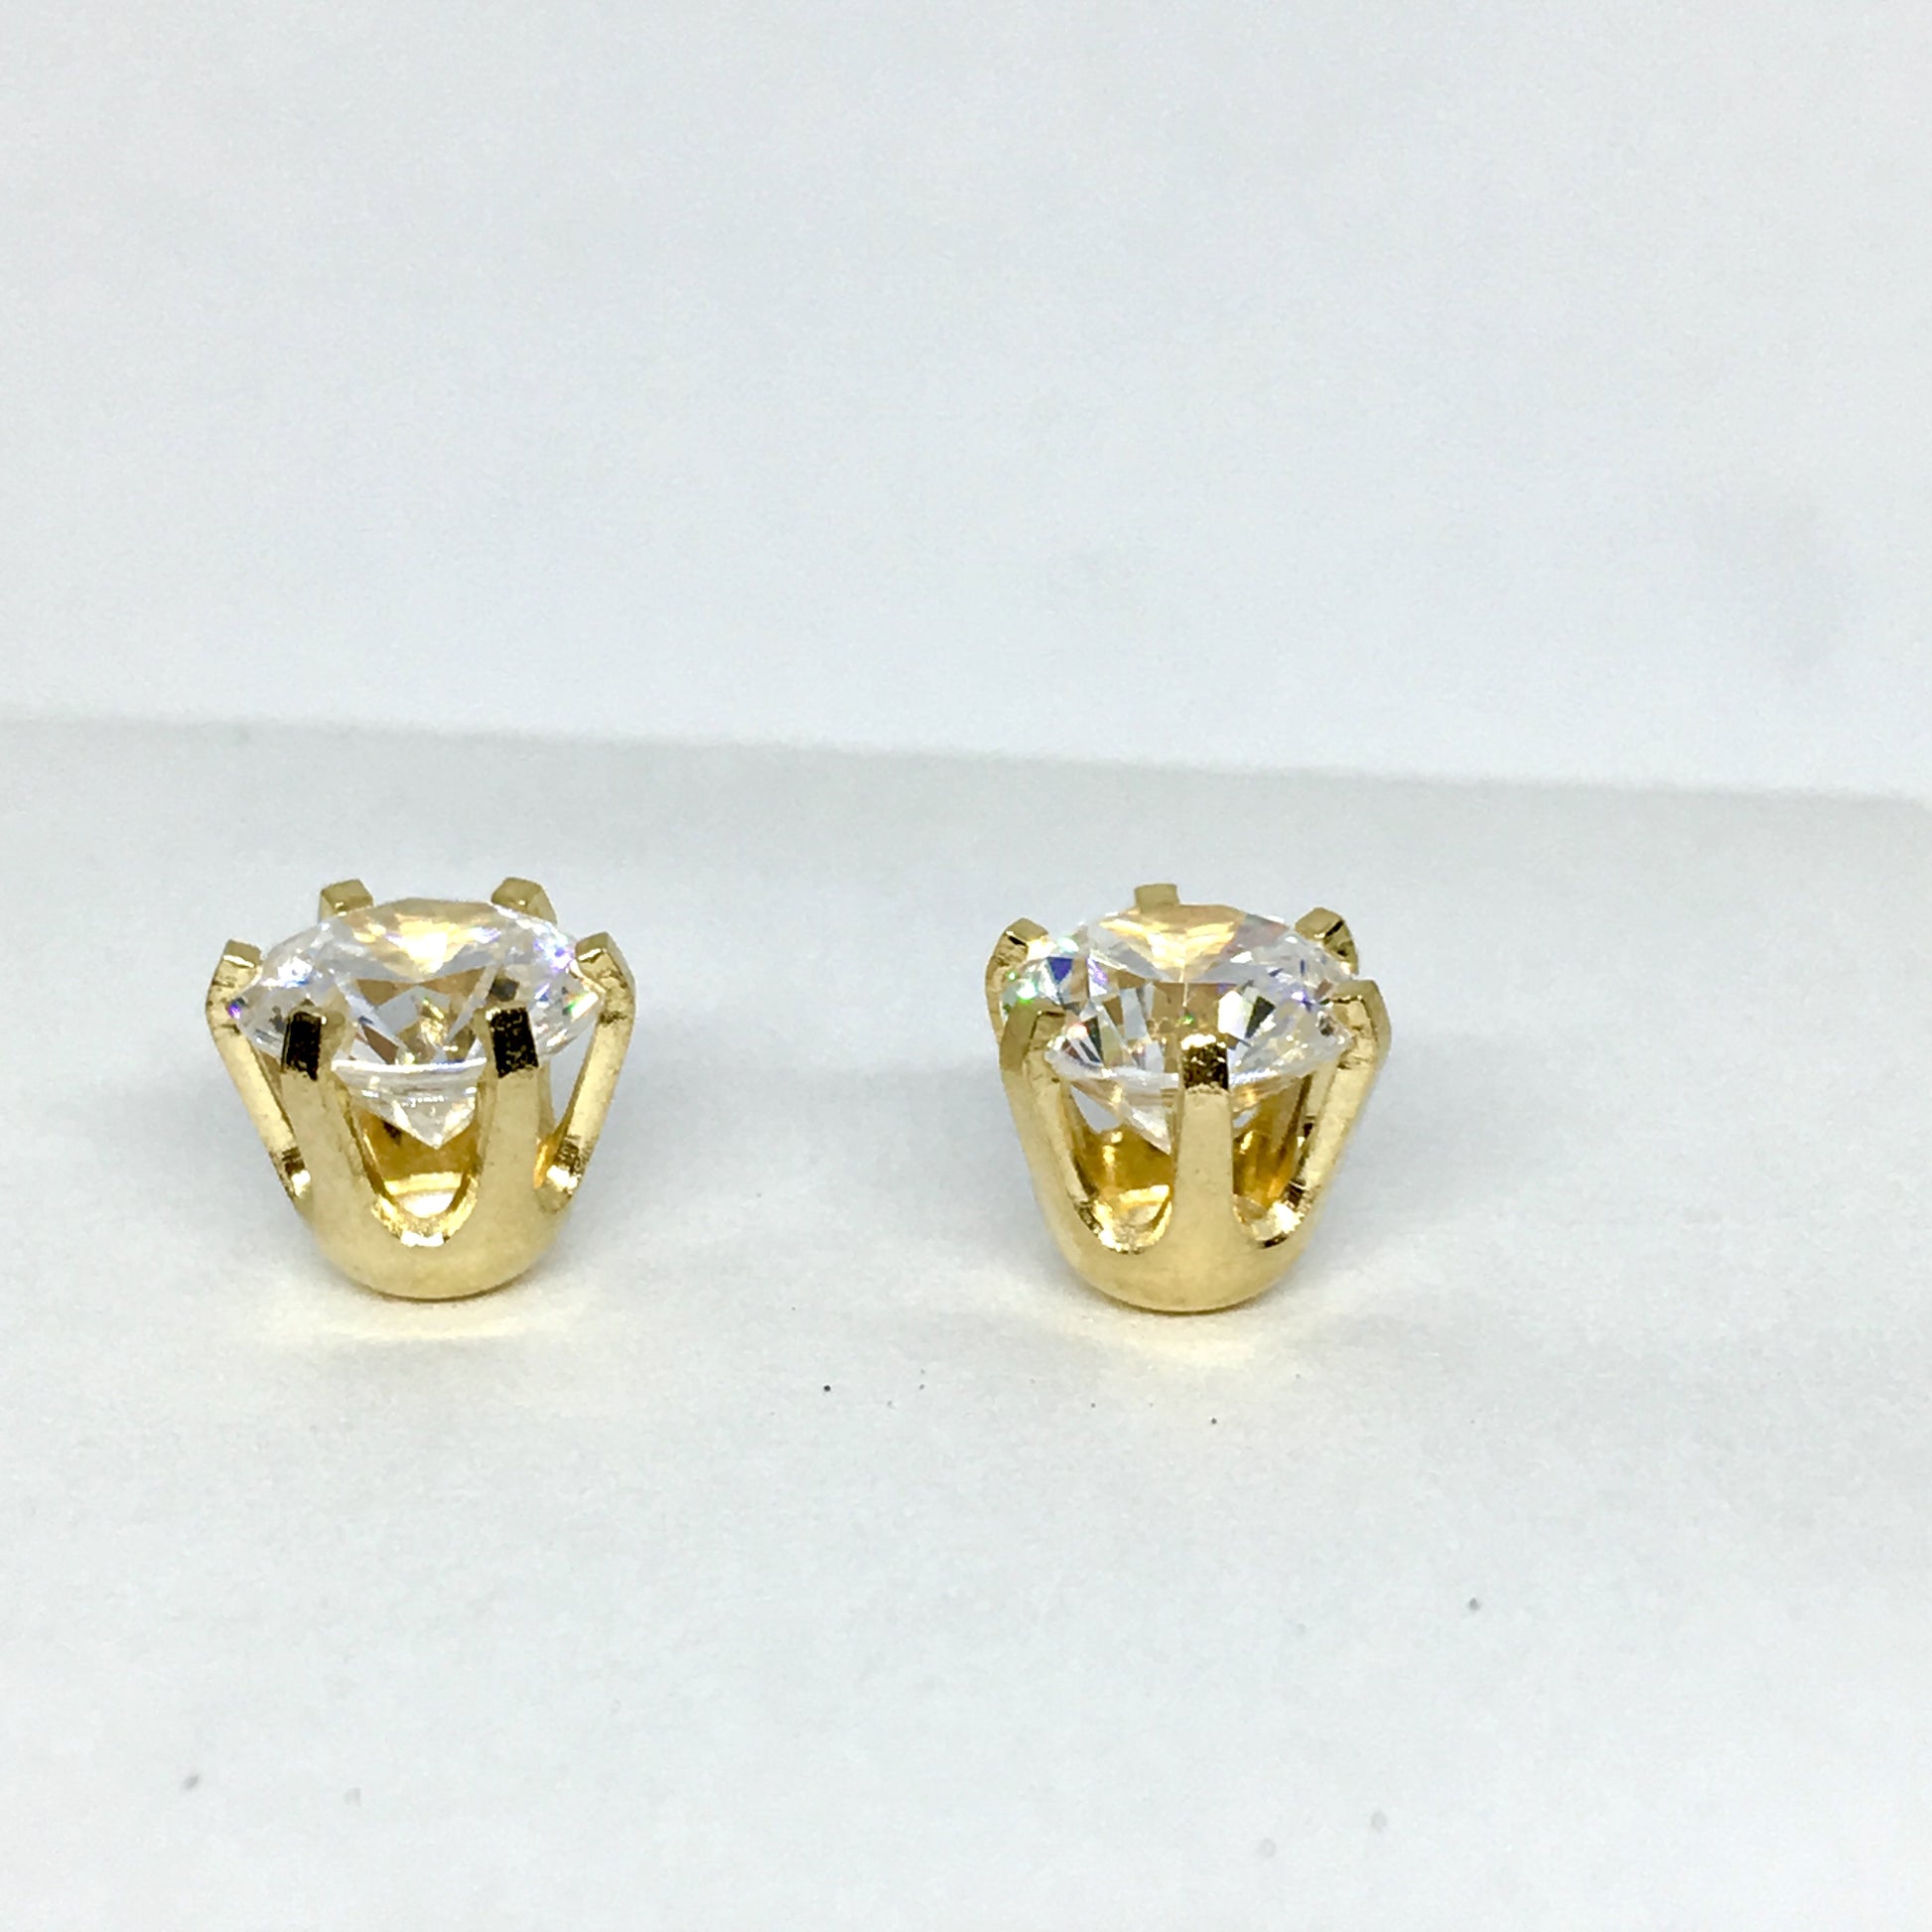 Accessory - Earrings - 14k Gold Sparkly 7 mm Diamond Alternative CZ Stud Earrings - Blingschlingers USA